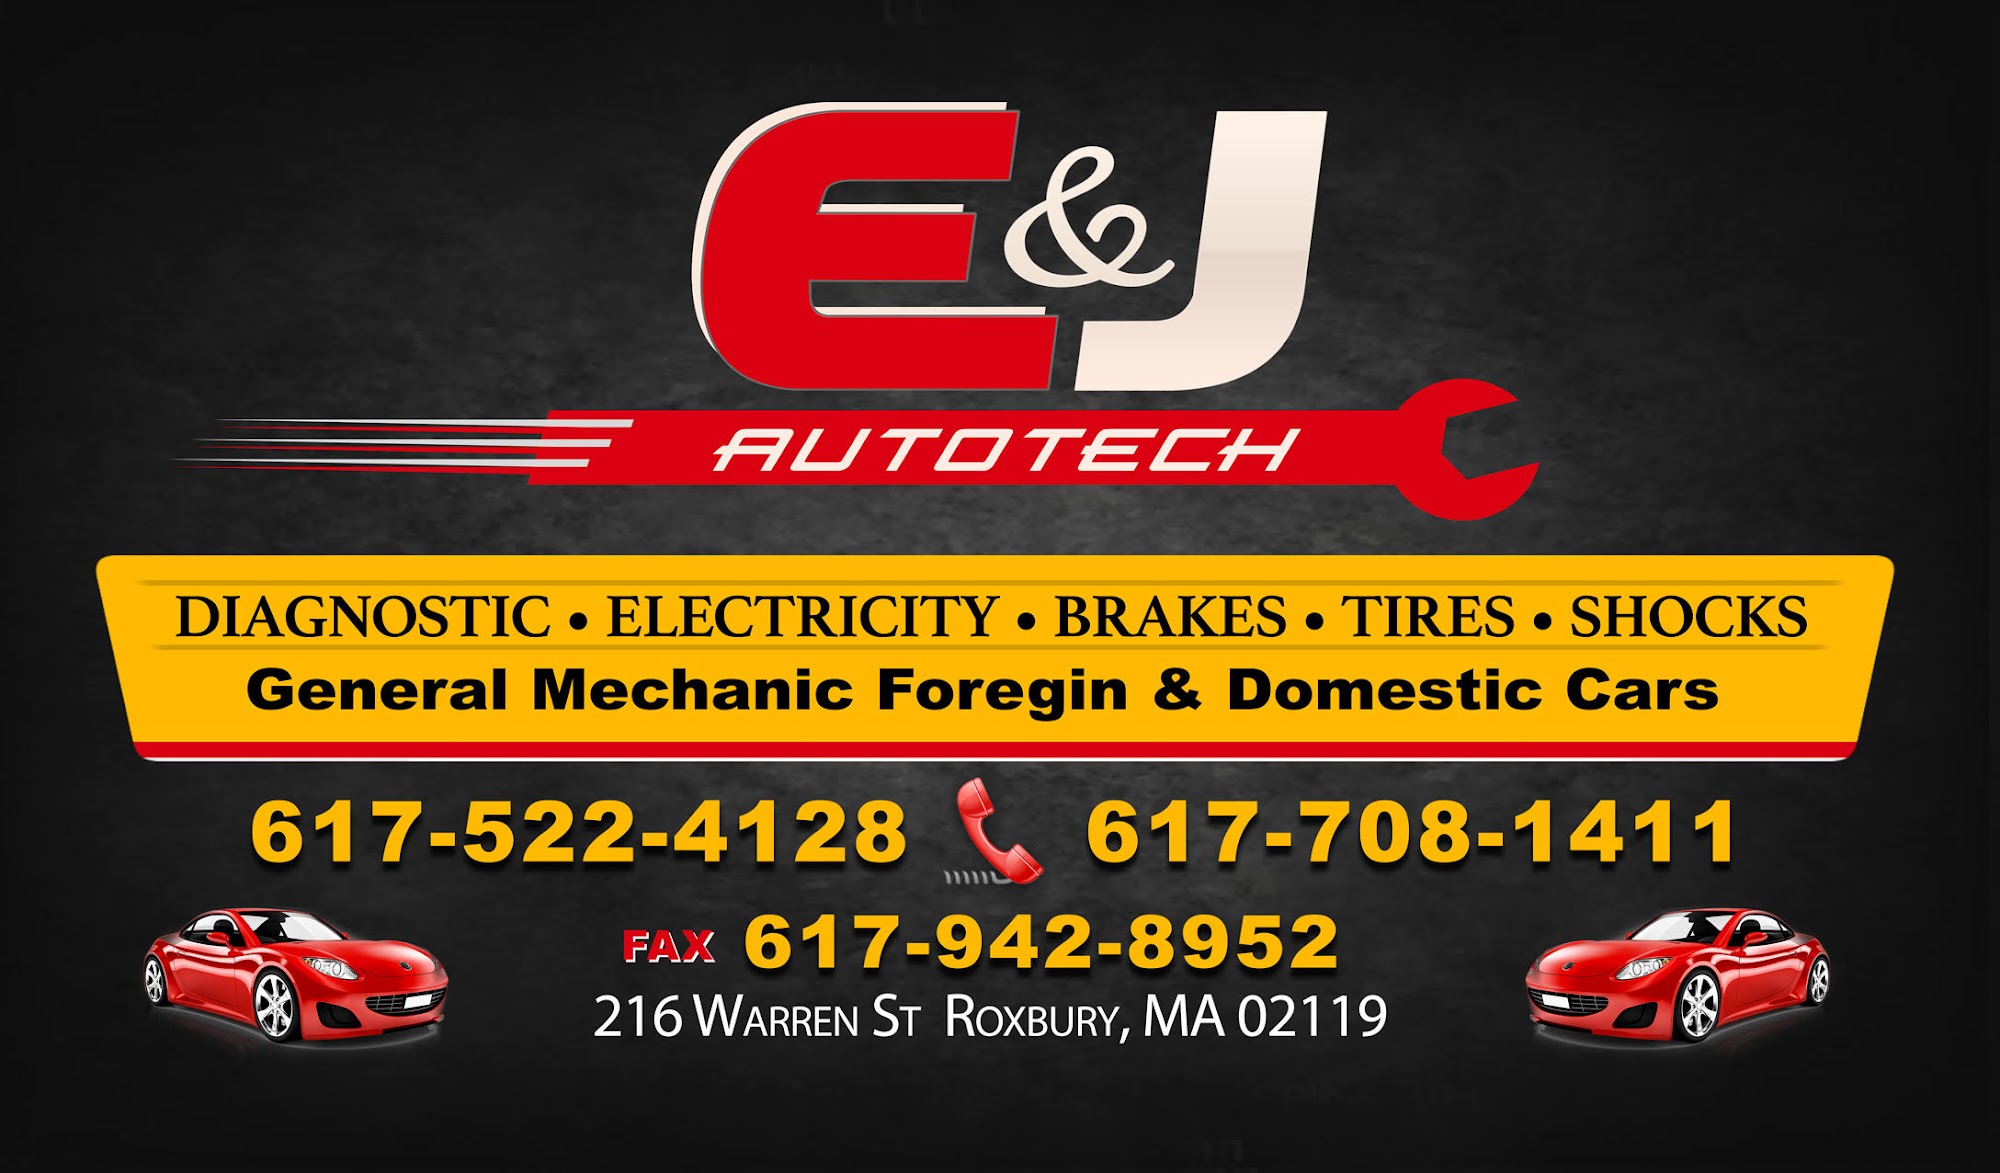 E&J Auto Tech Center & Tire